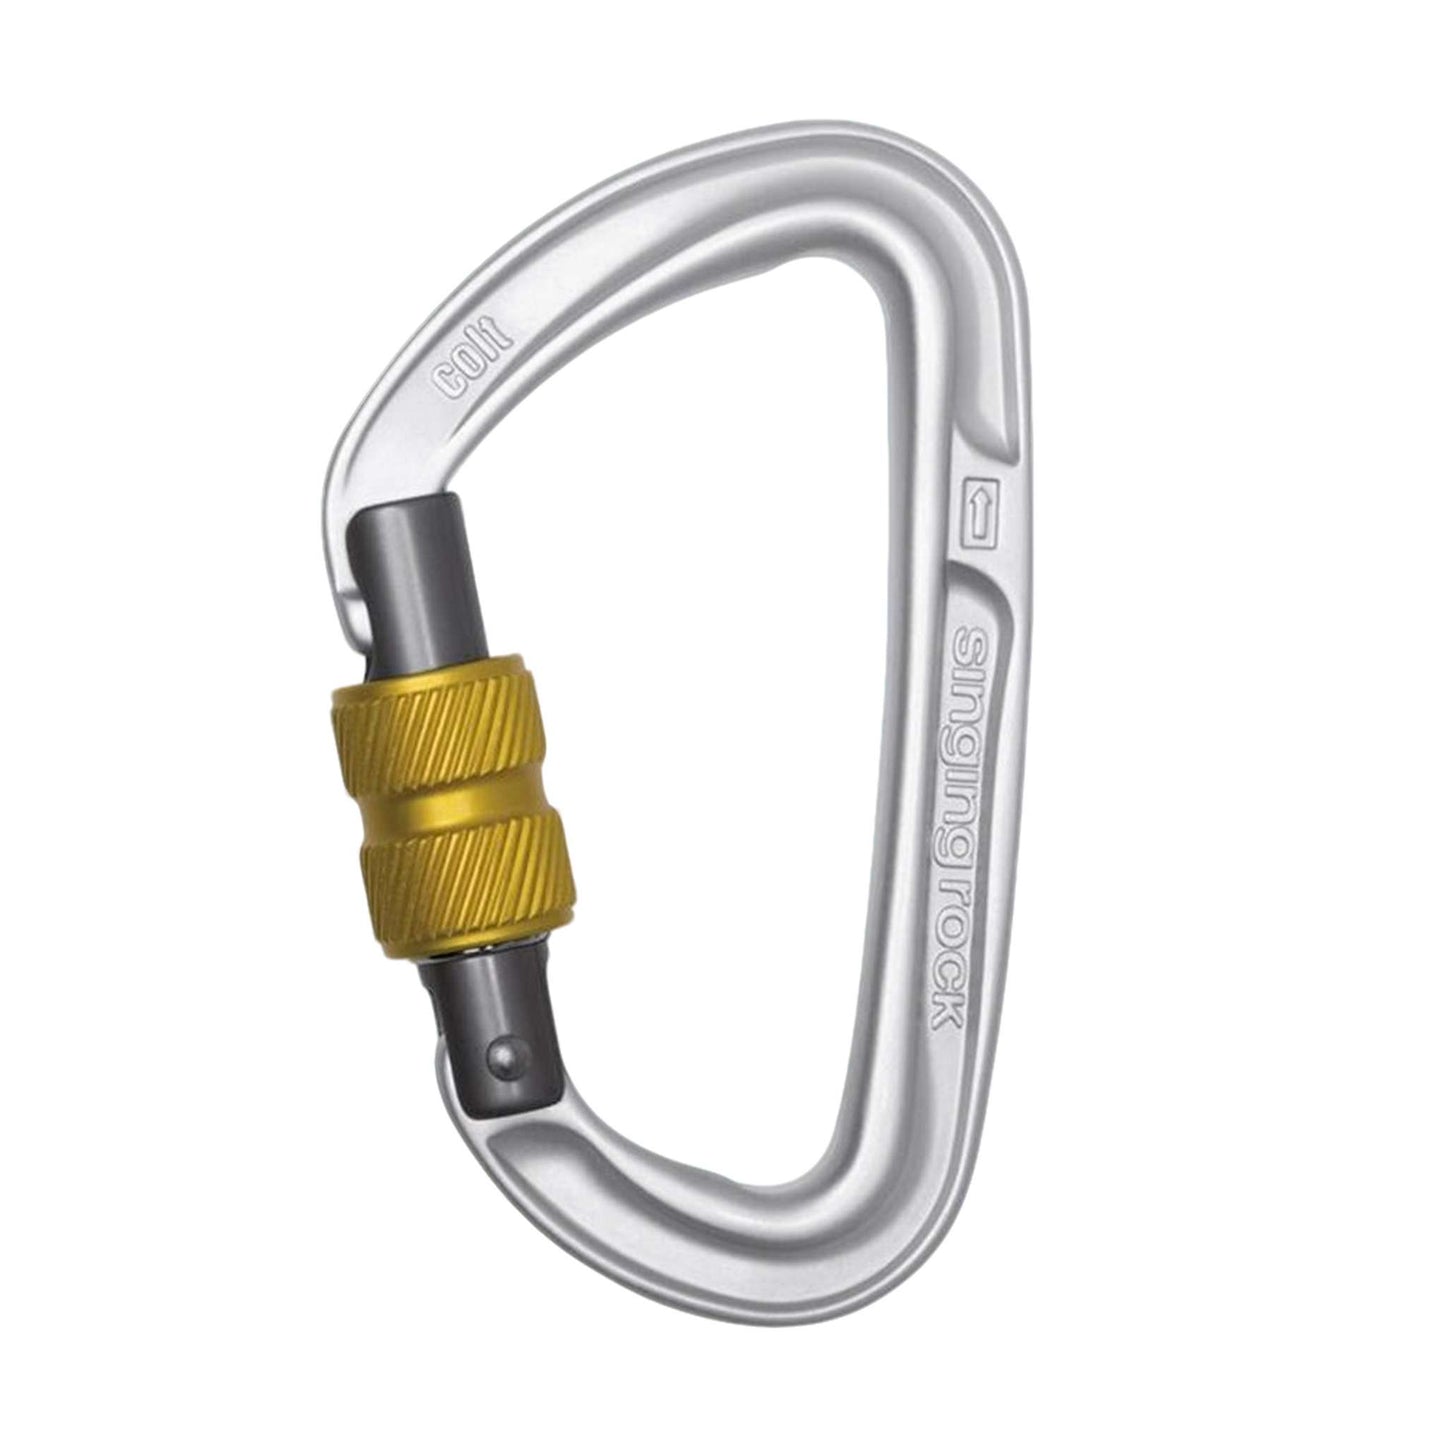 Colt Locking Carabiner Screwgate 3-Pack - Ultimate Climbing Safety Bundle